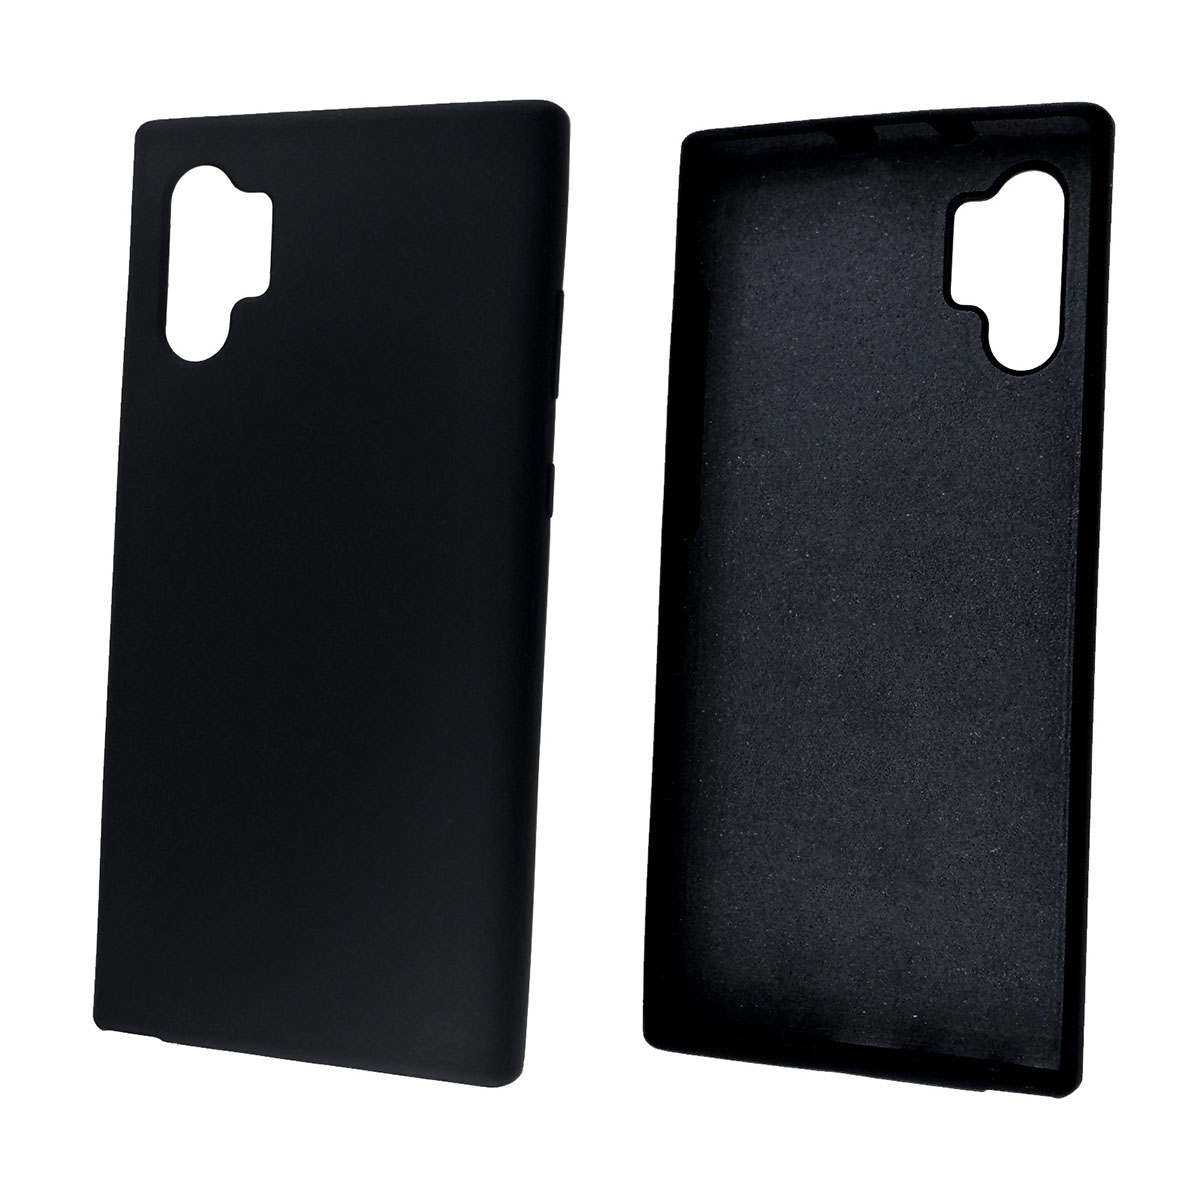 Чехол накладка Silicon Cover для SAMSUNG Galaxy Note 10 Plus (SM-N975), силикон, бархат, цвет черный.